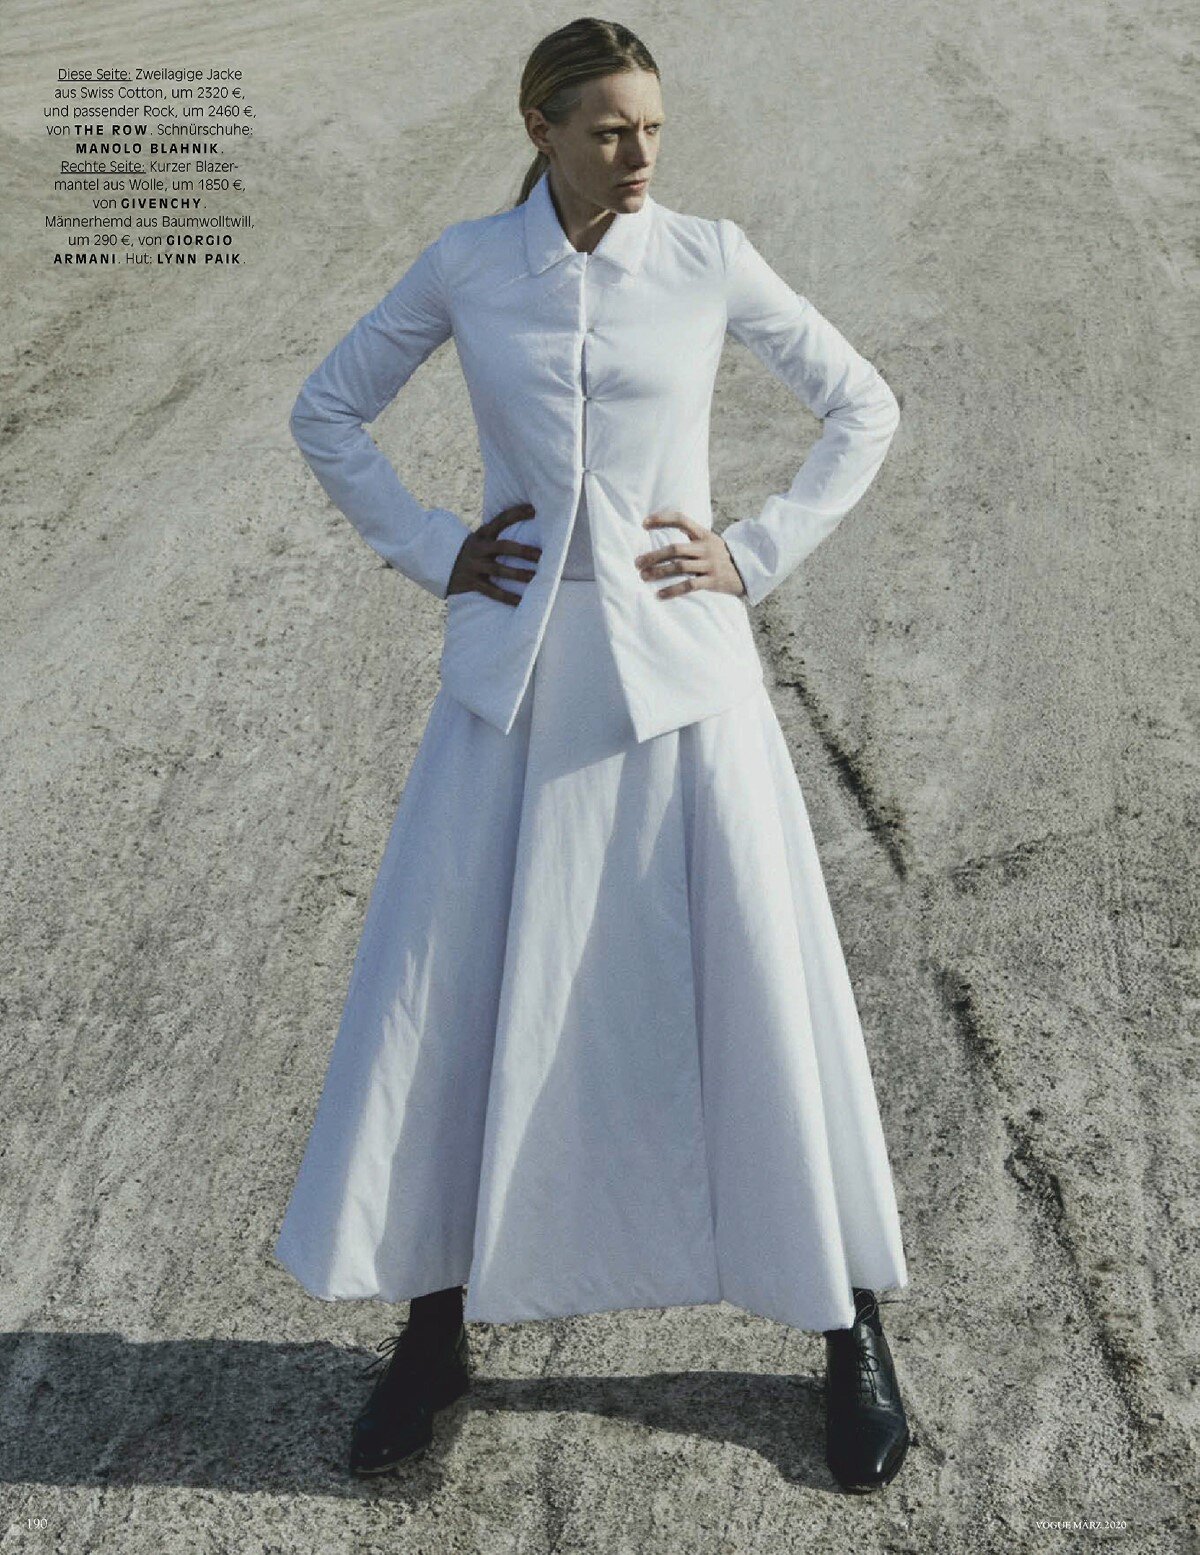 Erika Linder by Chris Colls Vogue Germany March 2020 (13).jpg